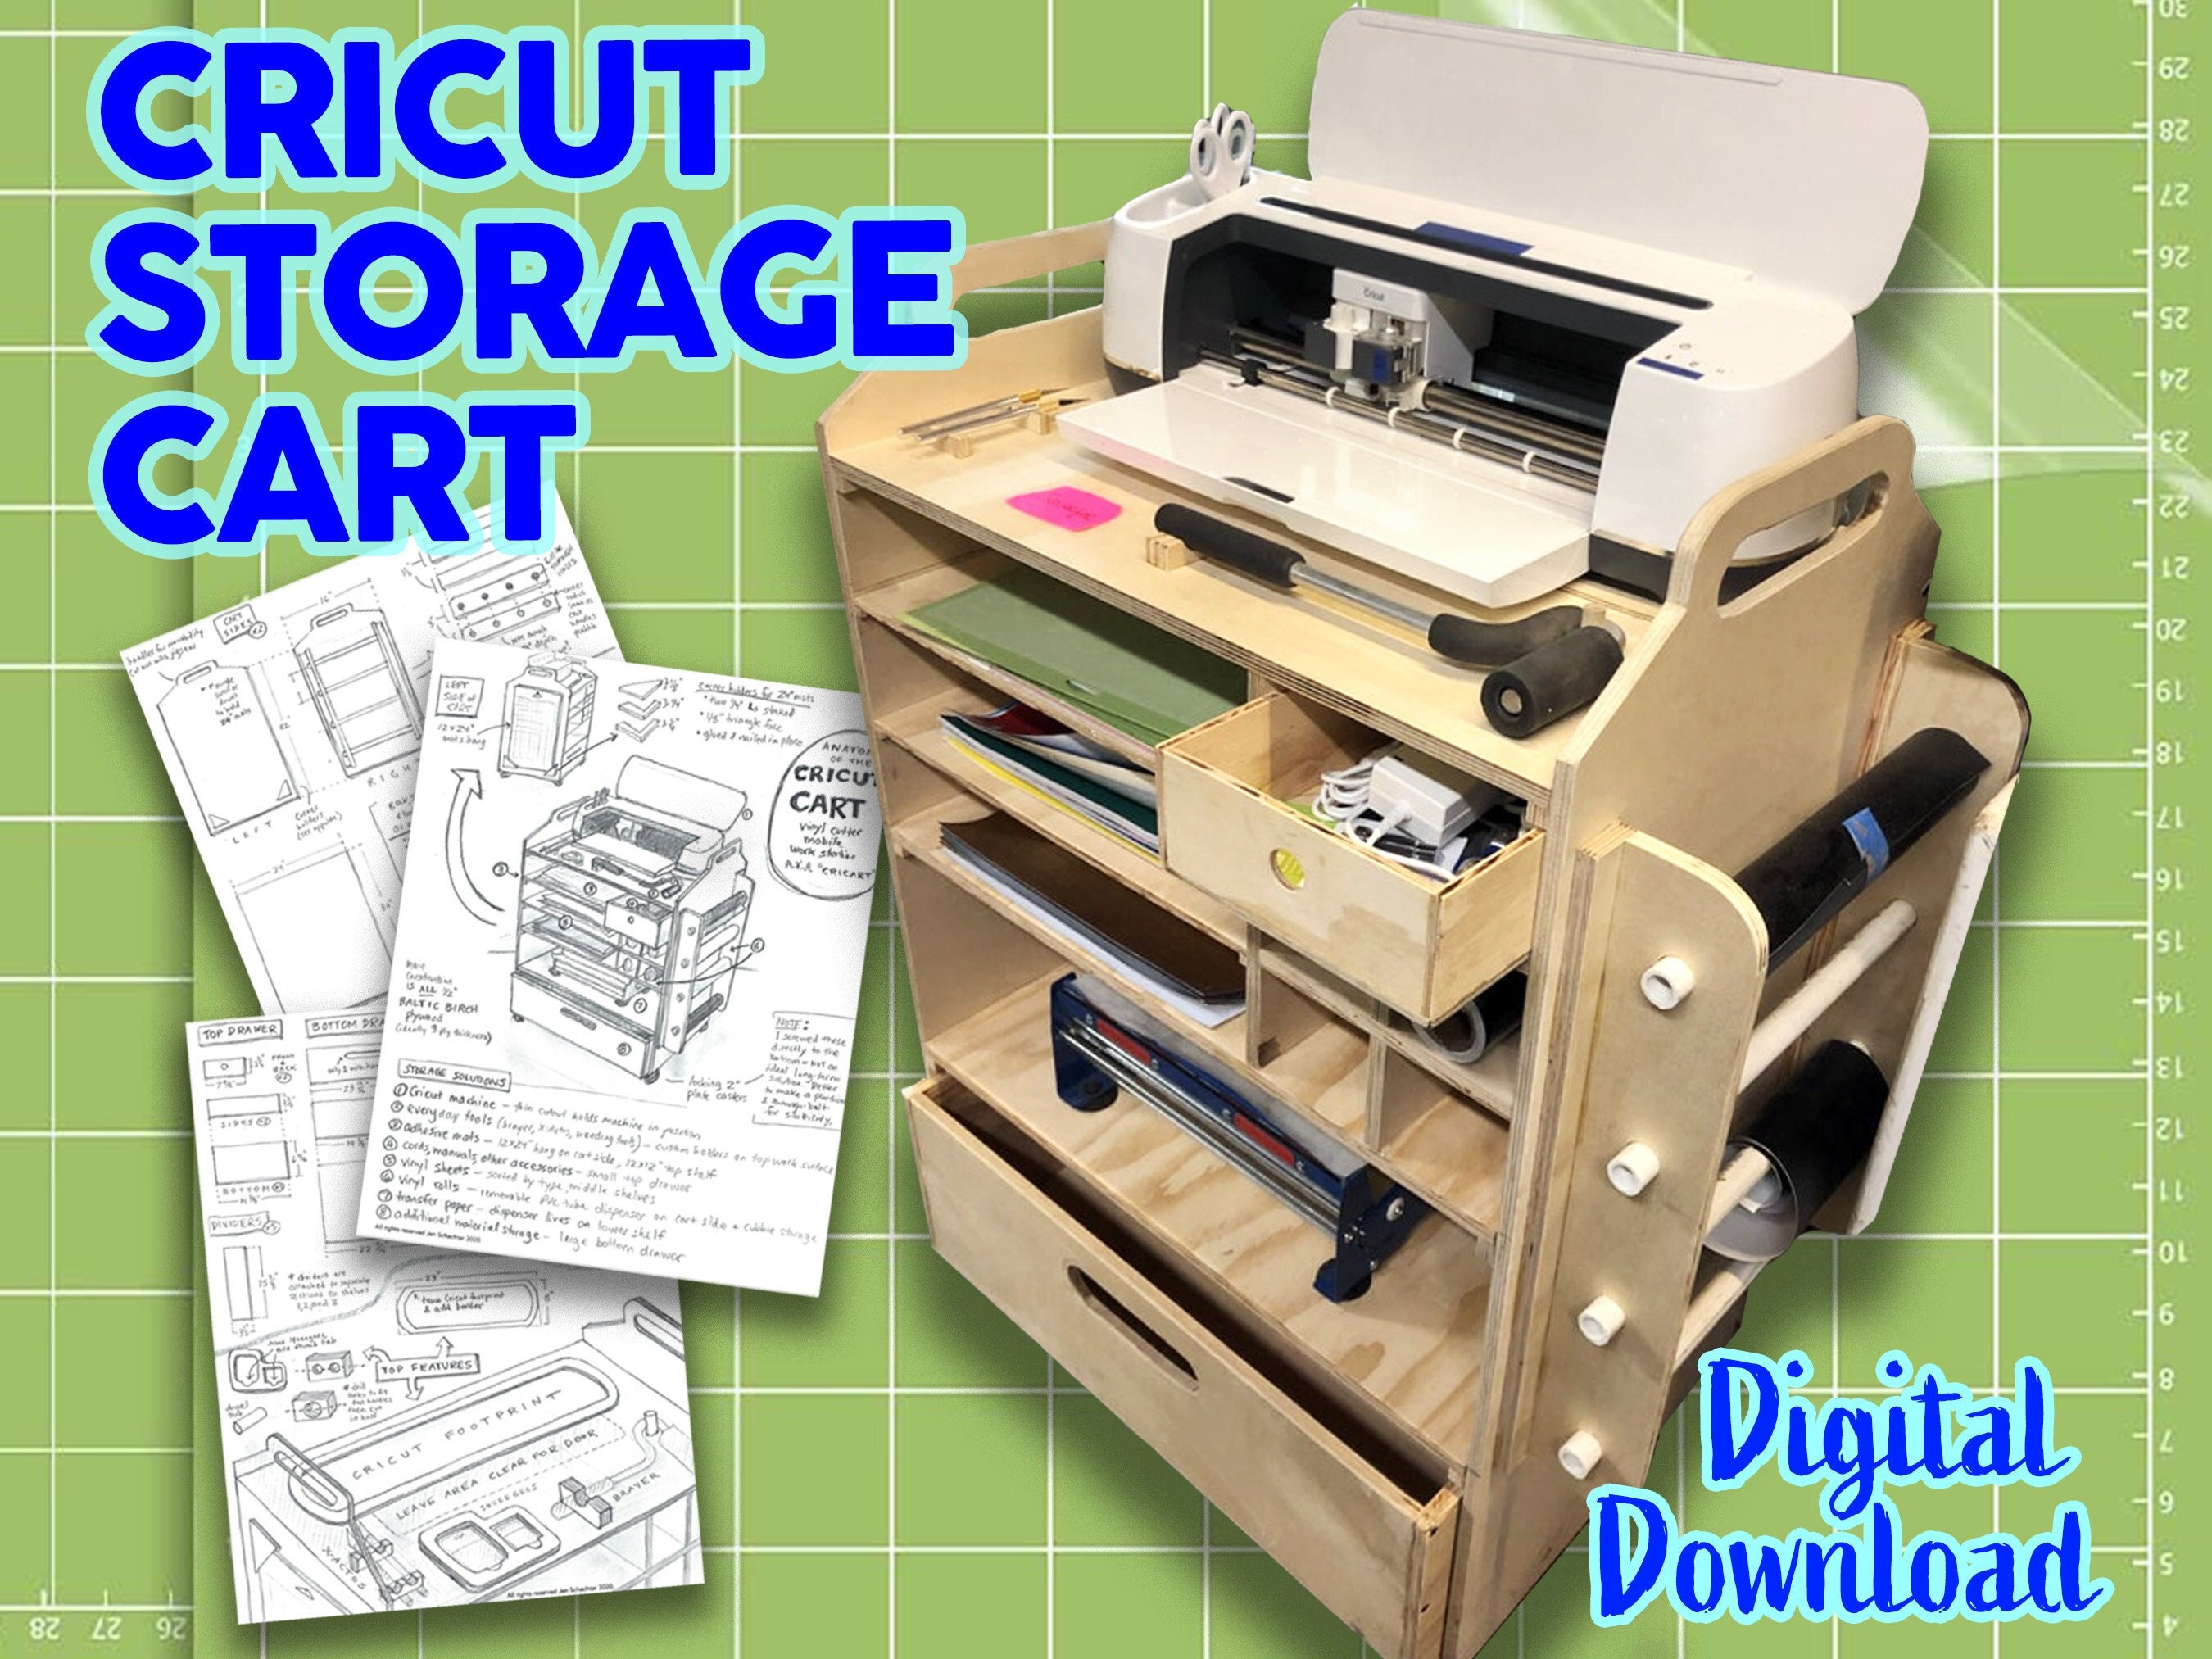 How to Make a DIY Rolling Cricut Craft Cart - ToolBox Divas